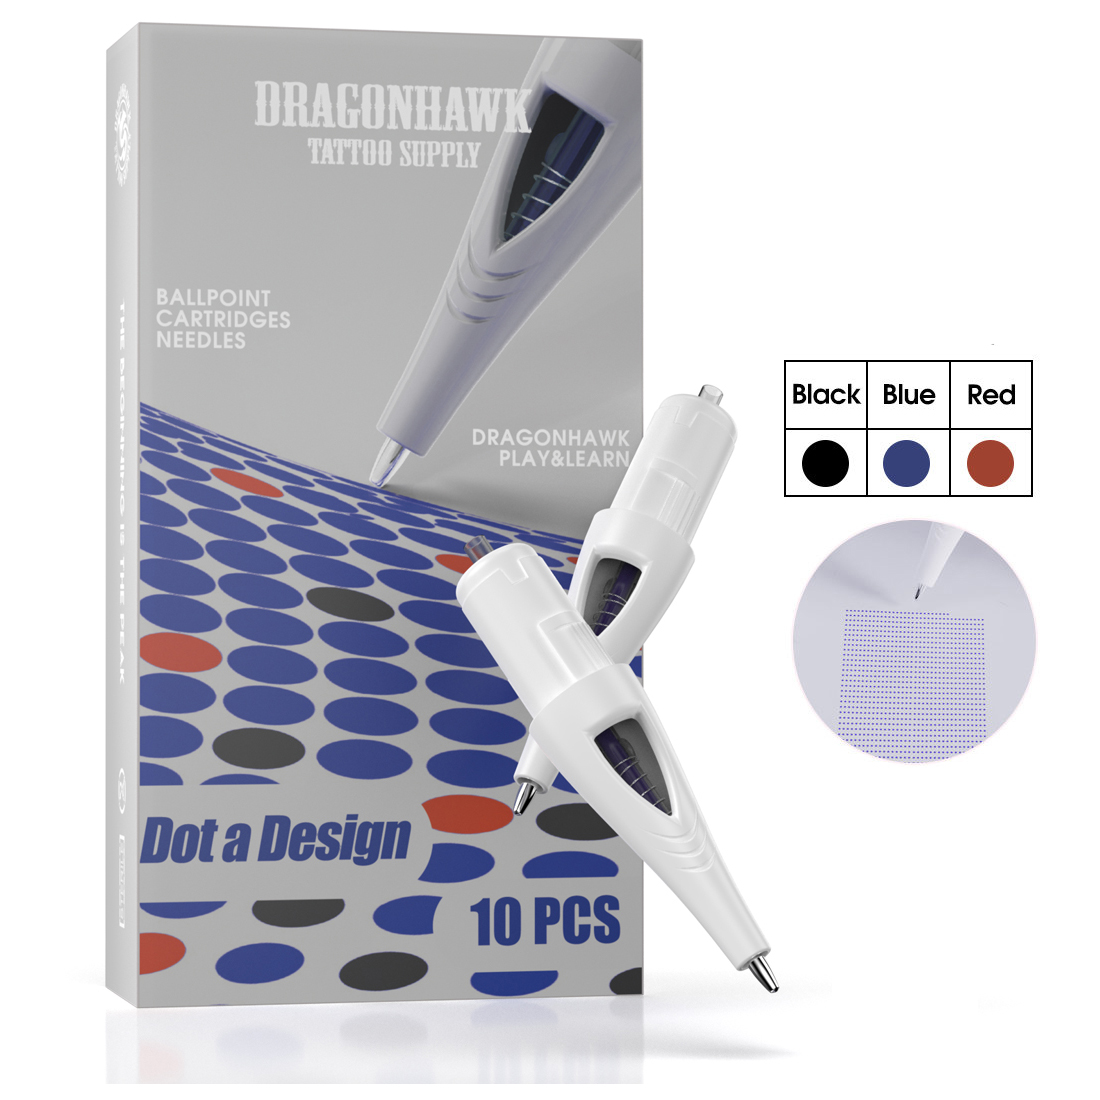 Dragonhawk Ballpoint Cartridge Needles For Tattoo Nybörjare Practice Toll Multicolor Dotwork Yz-Mix